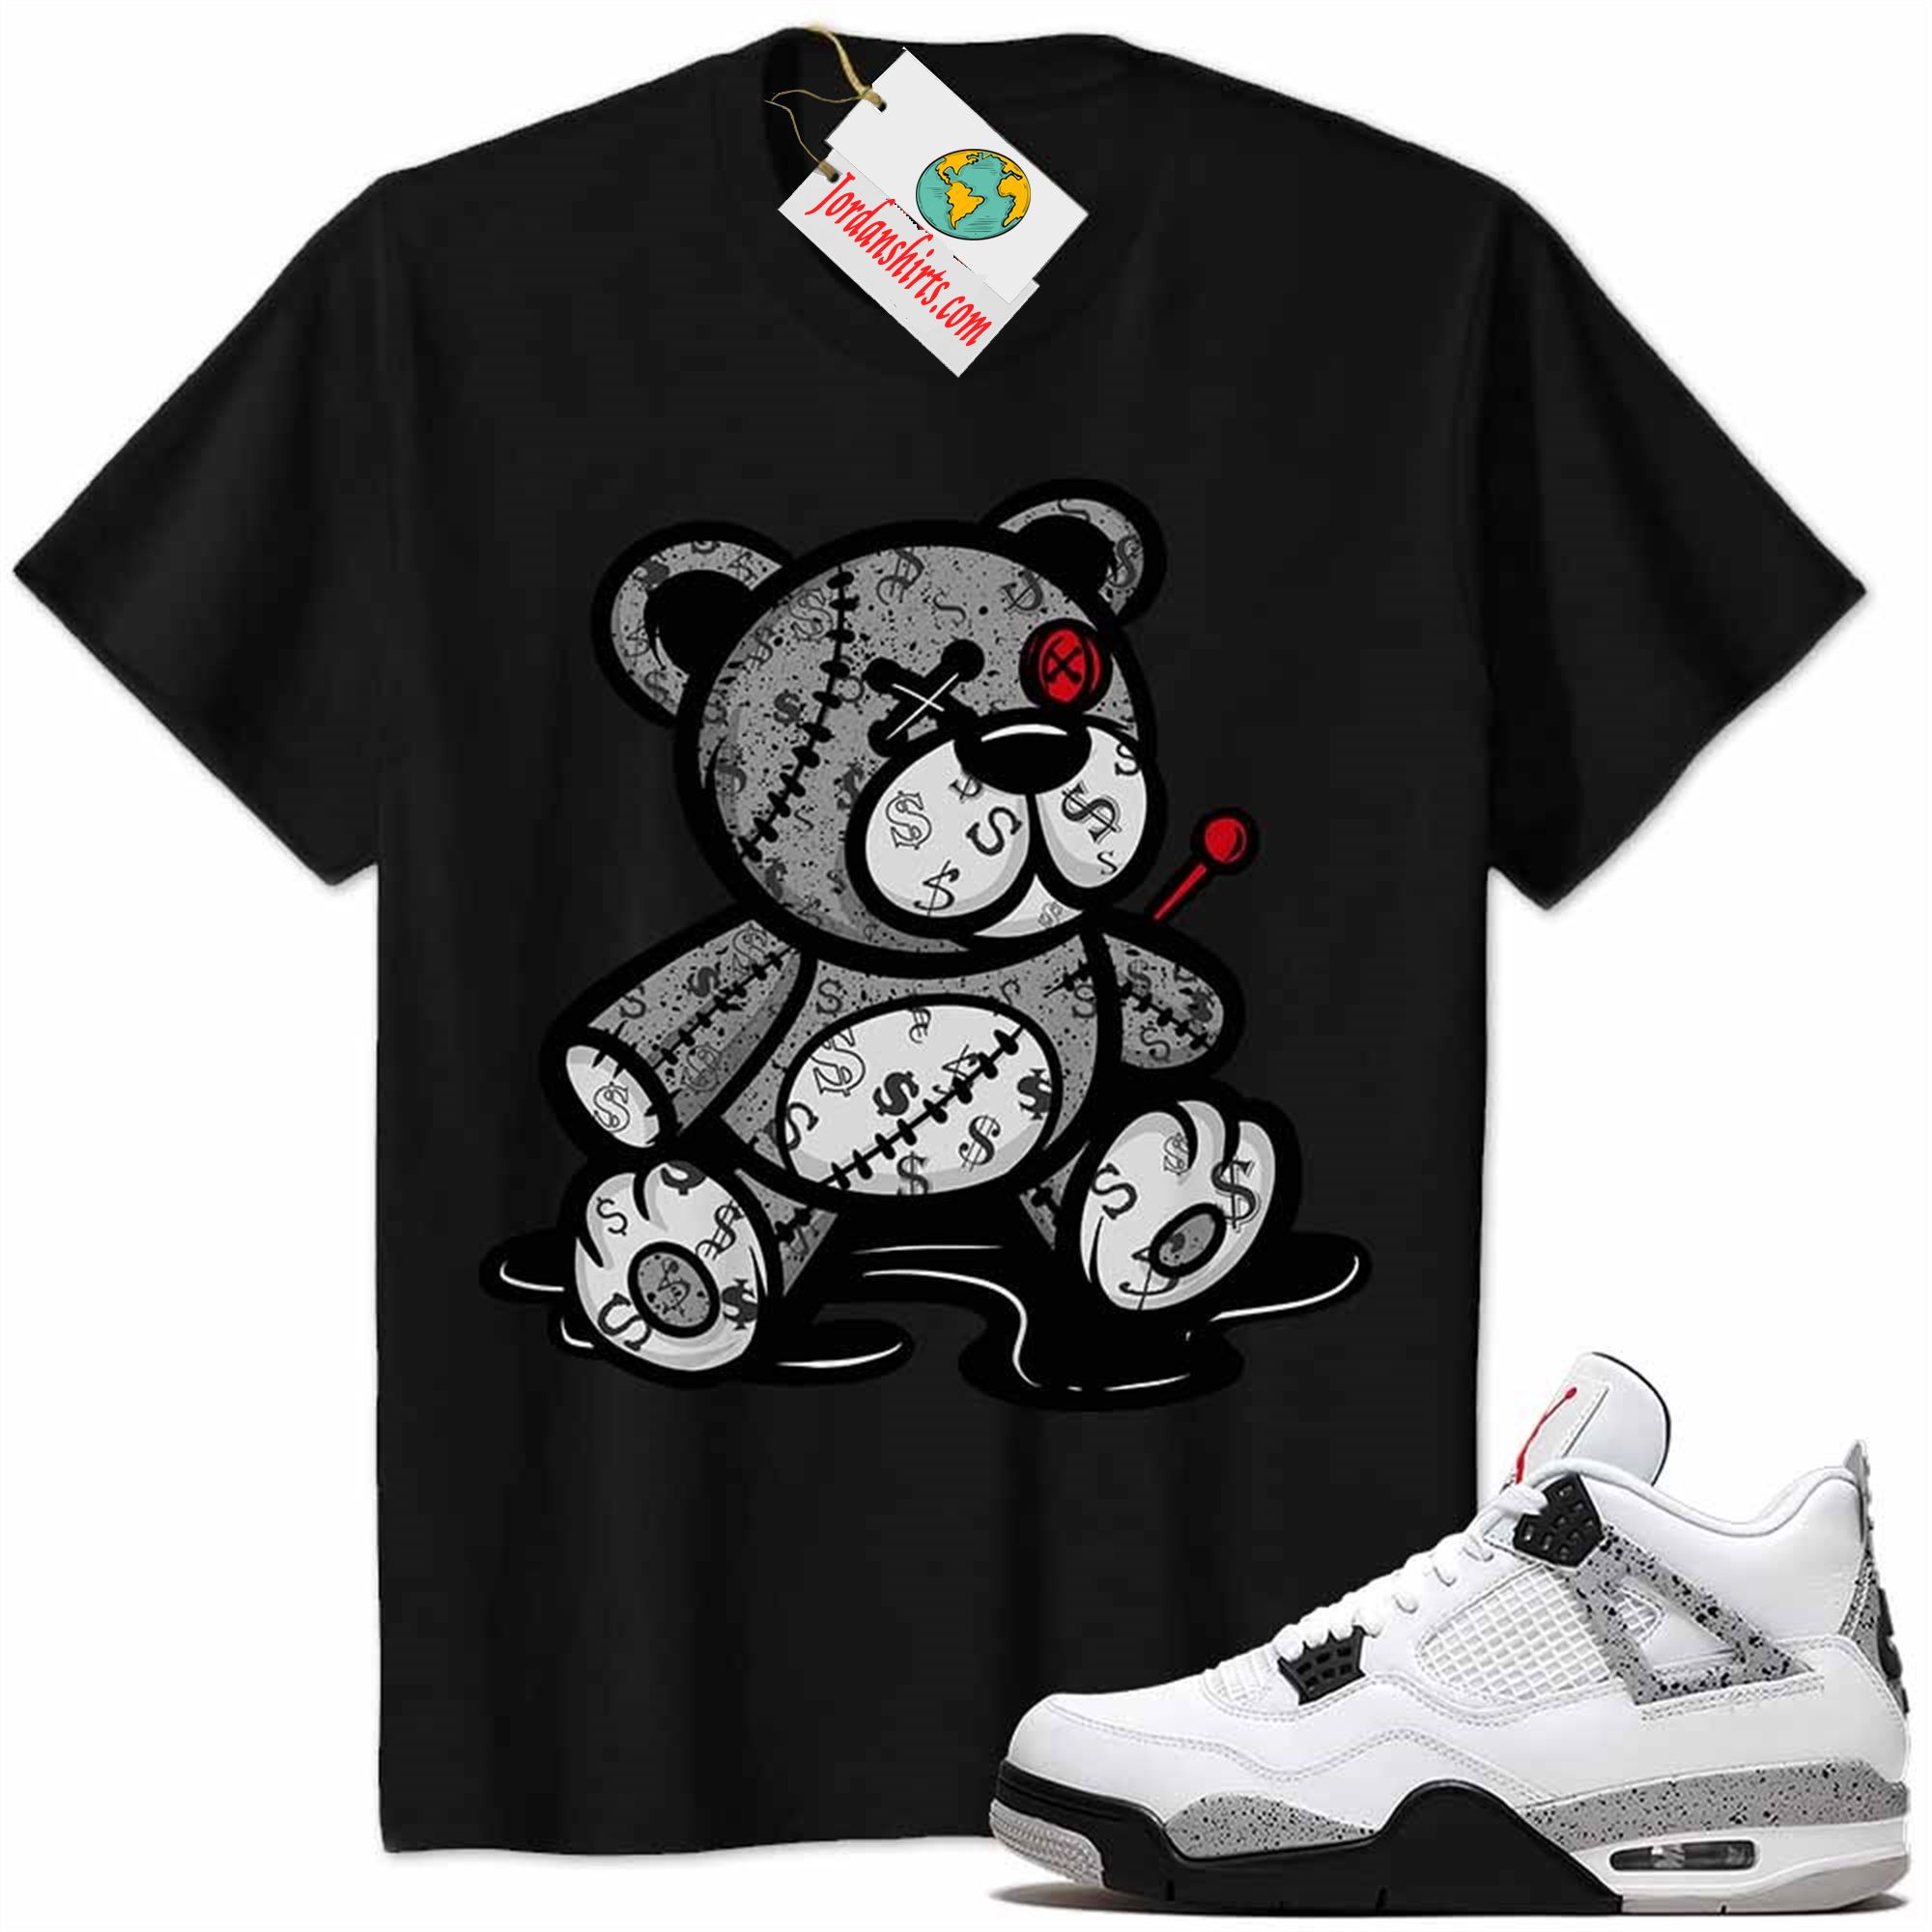 Jordan 4 Shirt, Jordan 4 Cement Shirt Teddy Bear All Money In Black Plus Size Up To 5xl